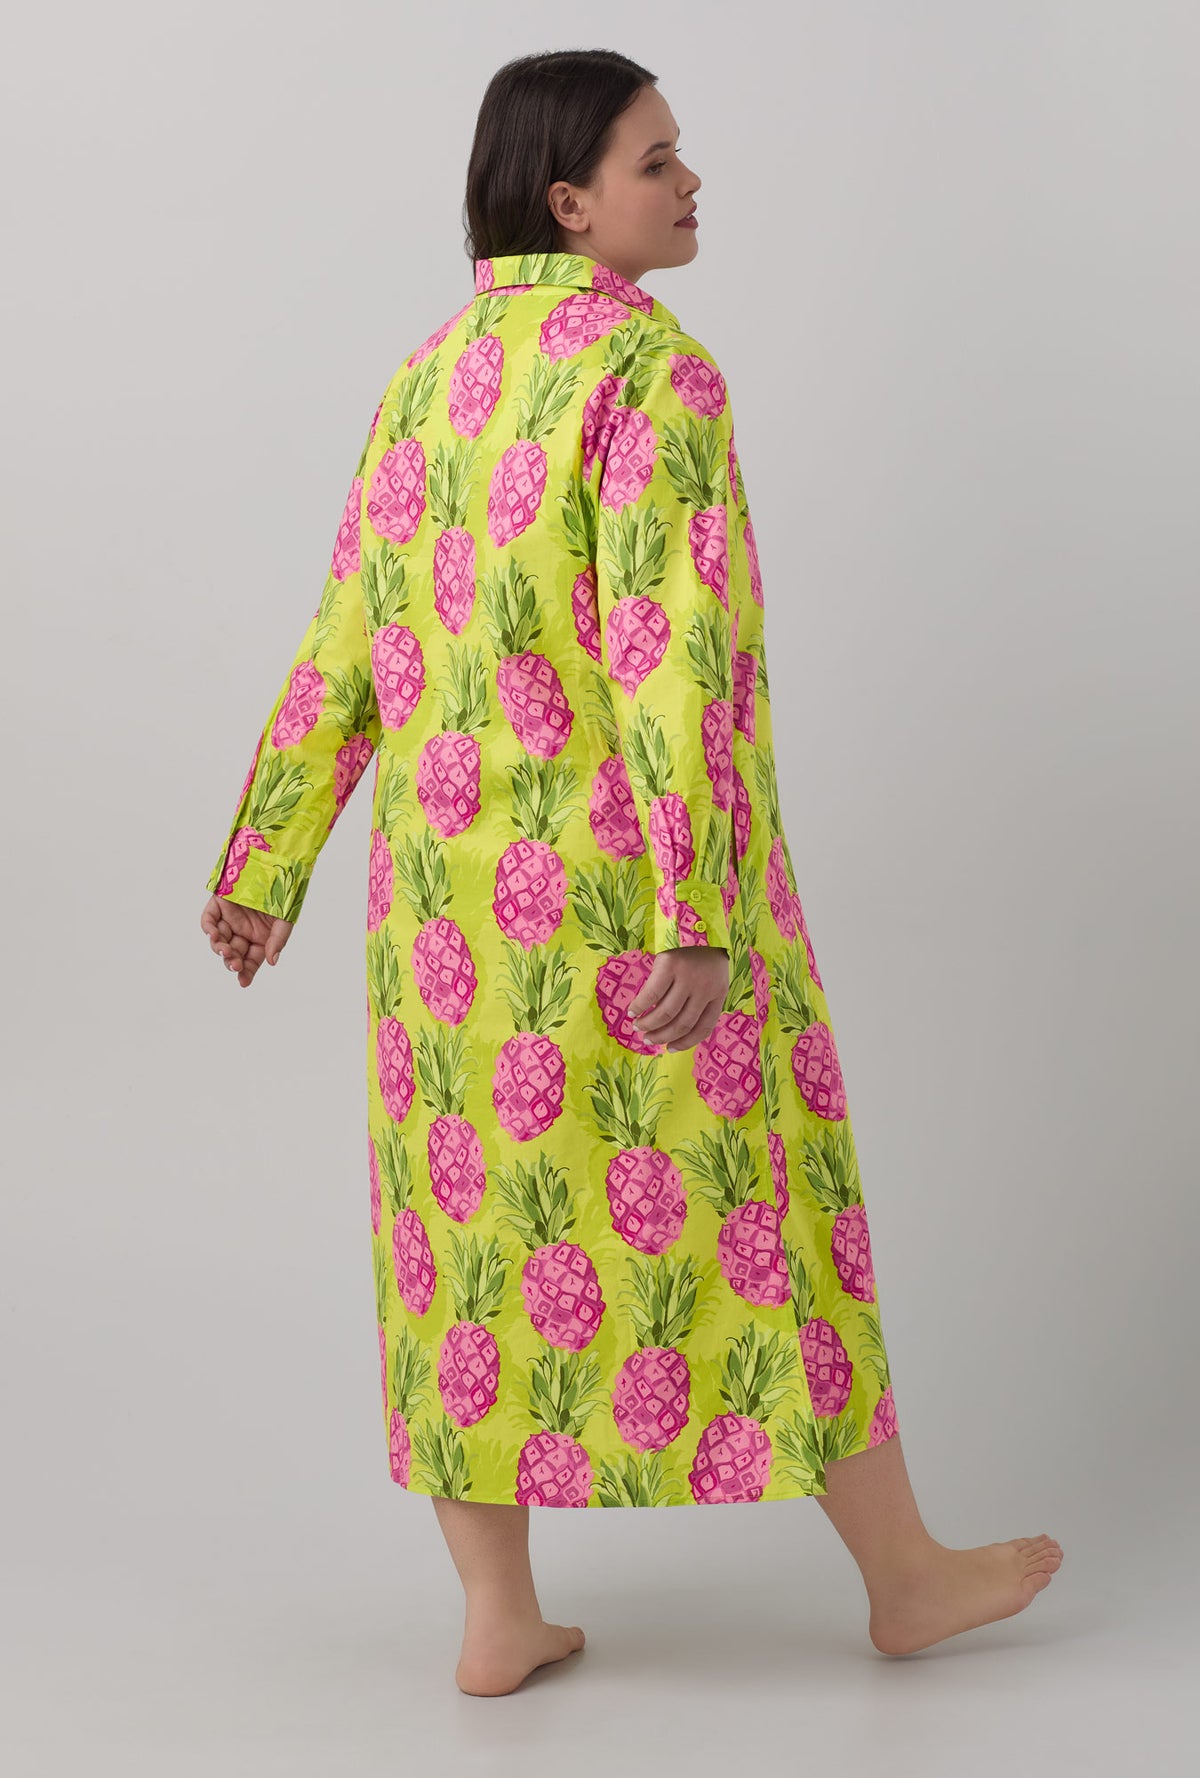 A lady wearing long sleeve maxi shirt with kiwi pineapple print